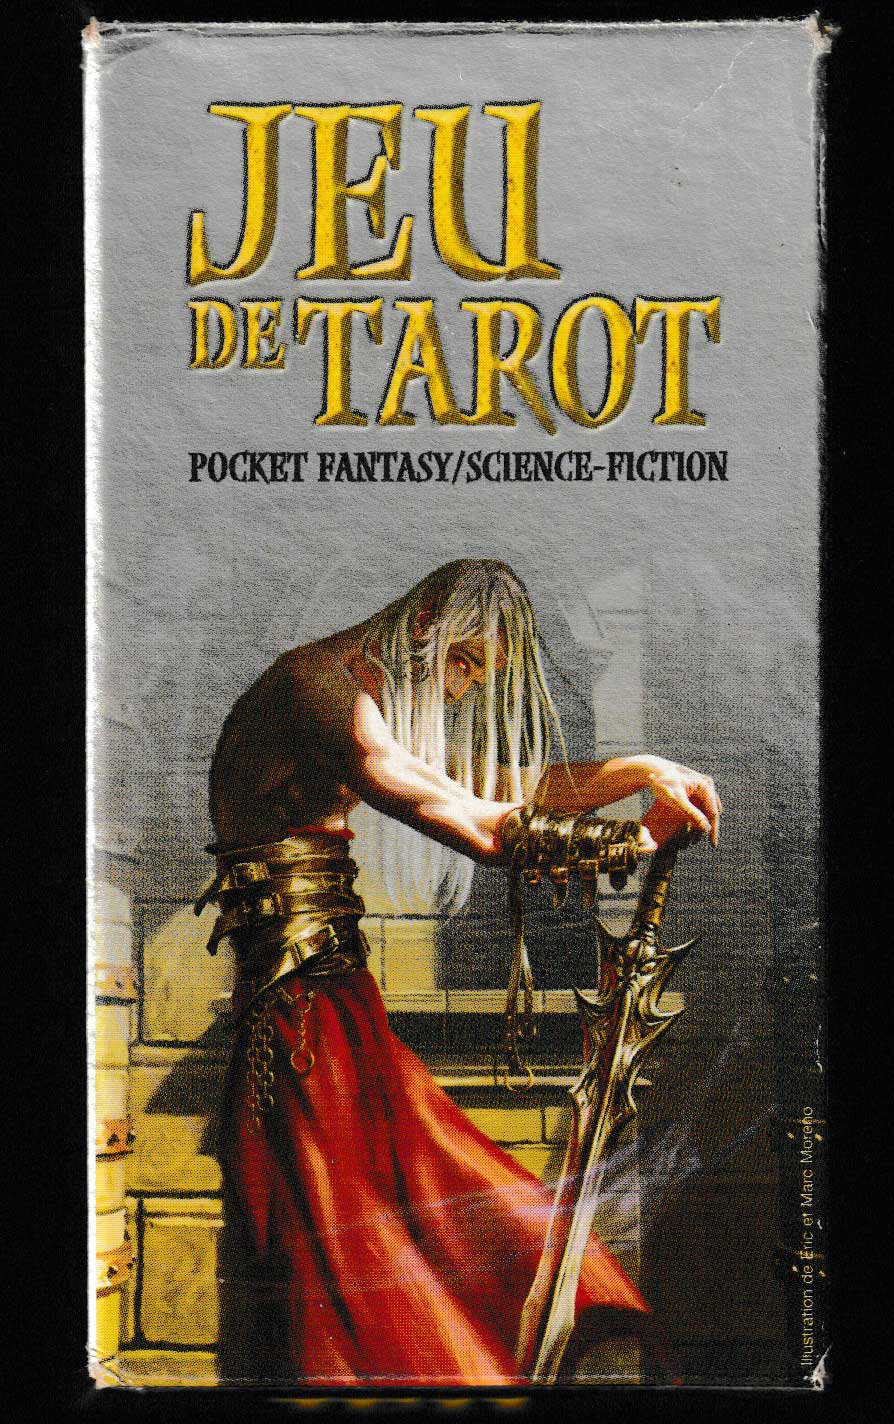 Jeu de Tarot Pocket Fantasy/Science-Fiction — The World of Playing Cards